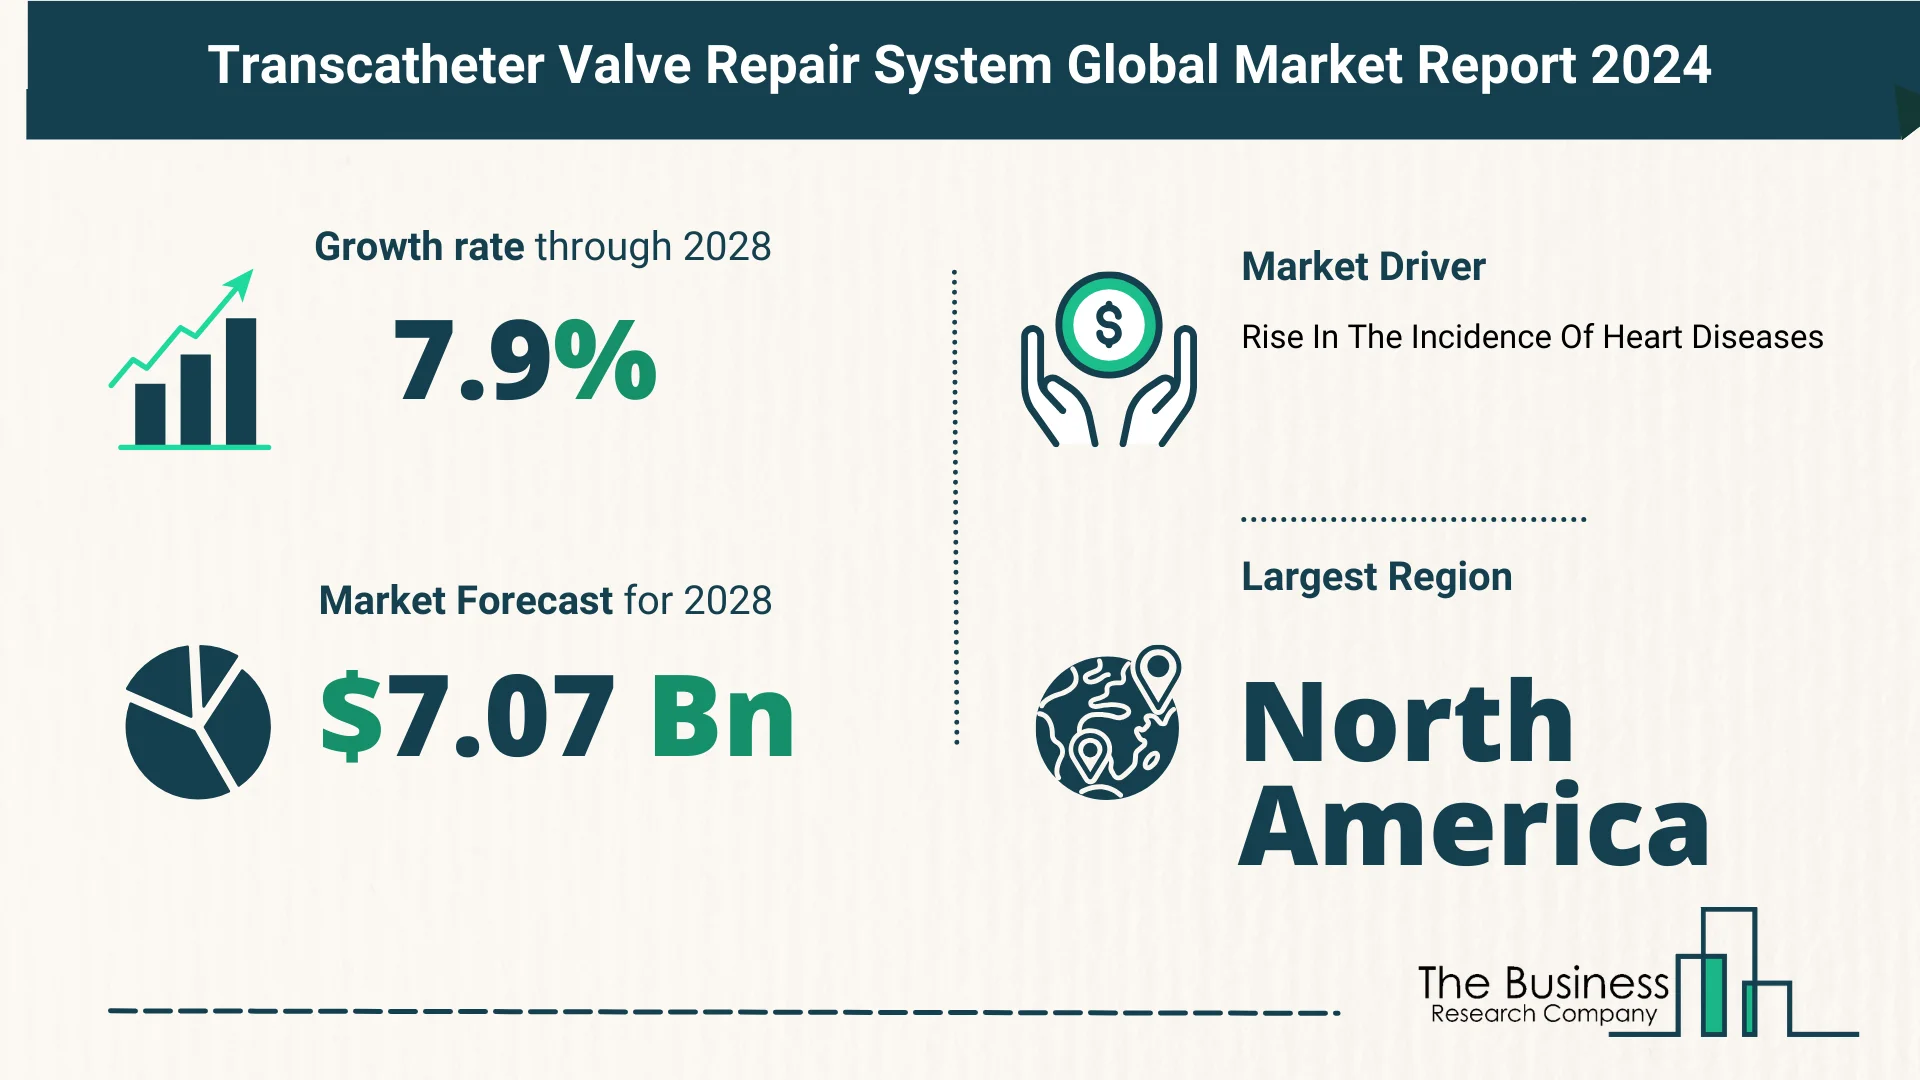 Global Transcatheter Valve Repair System Market Size